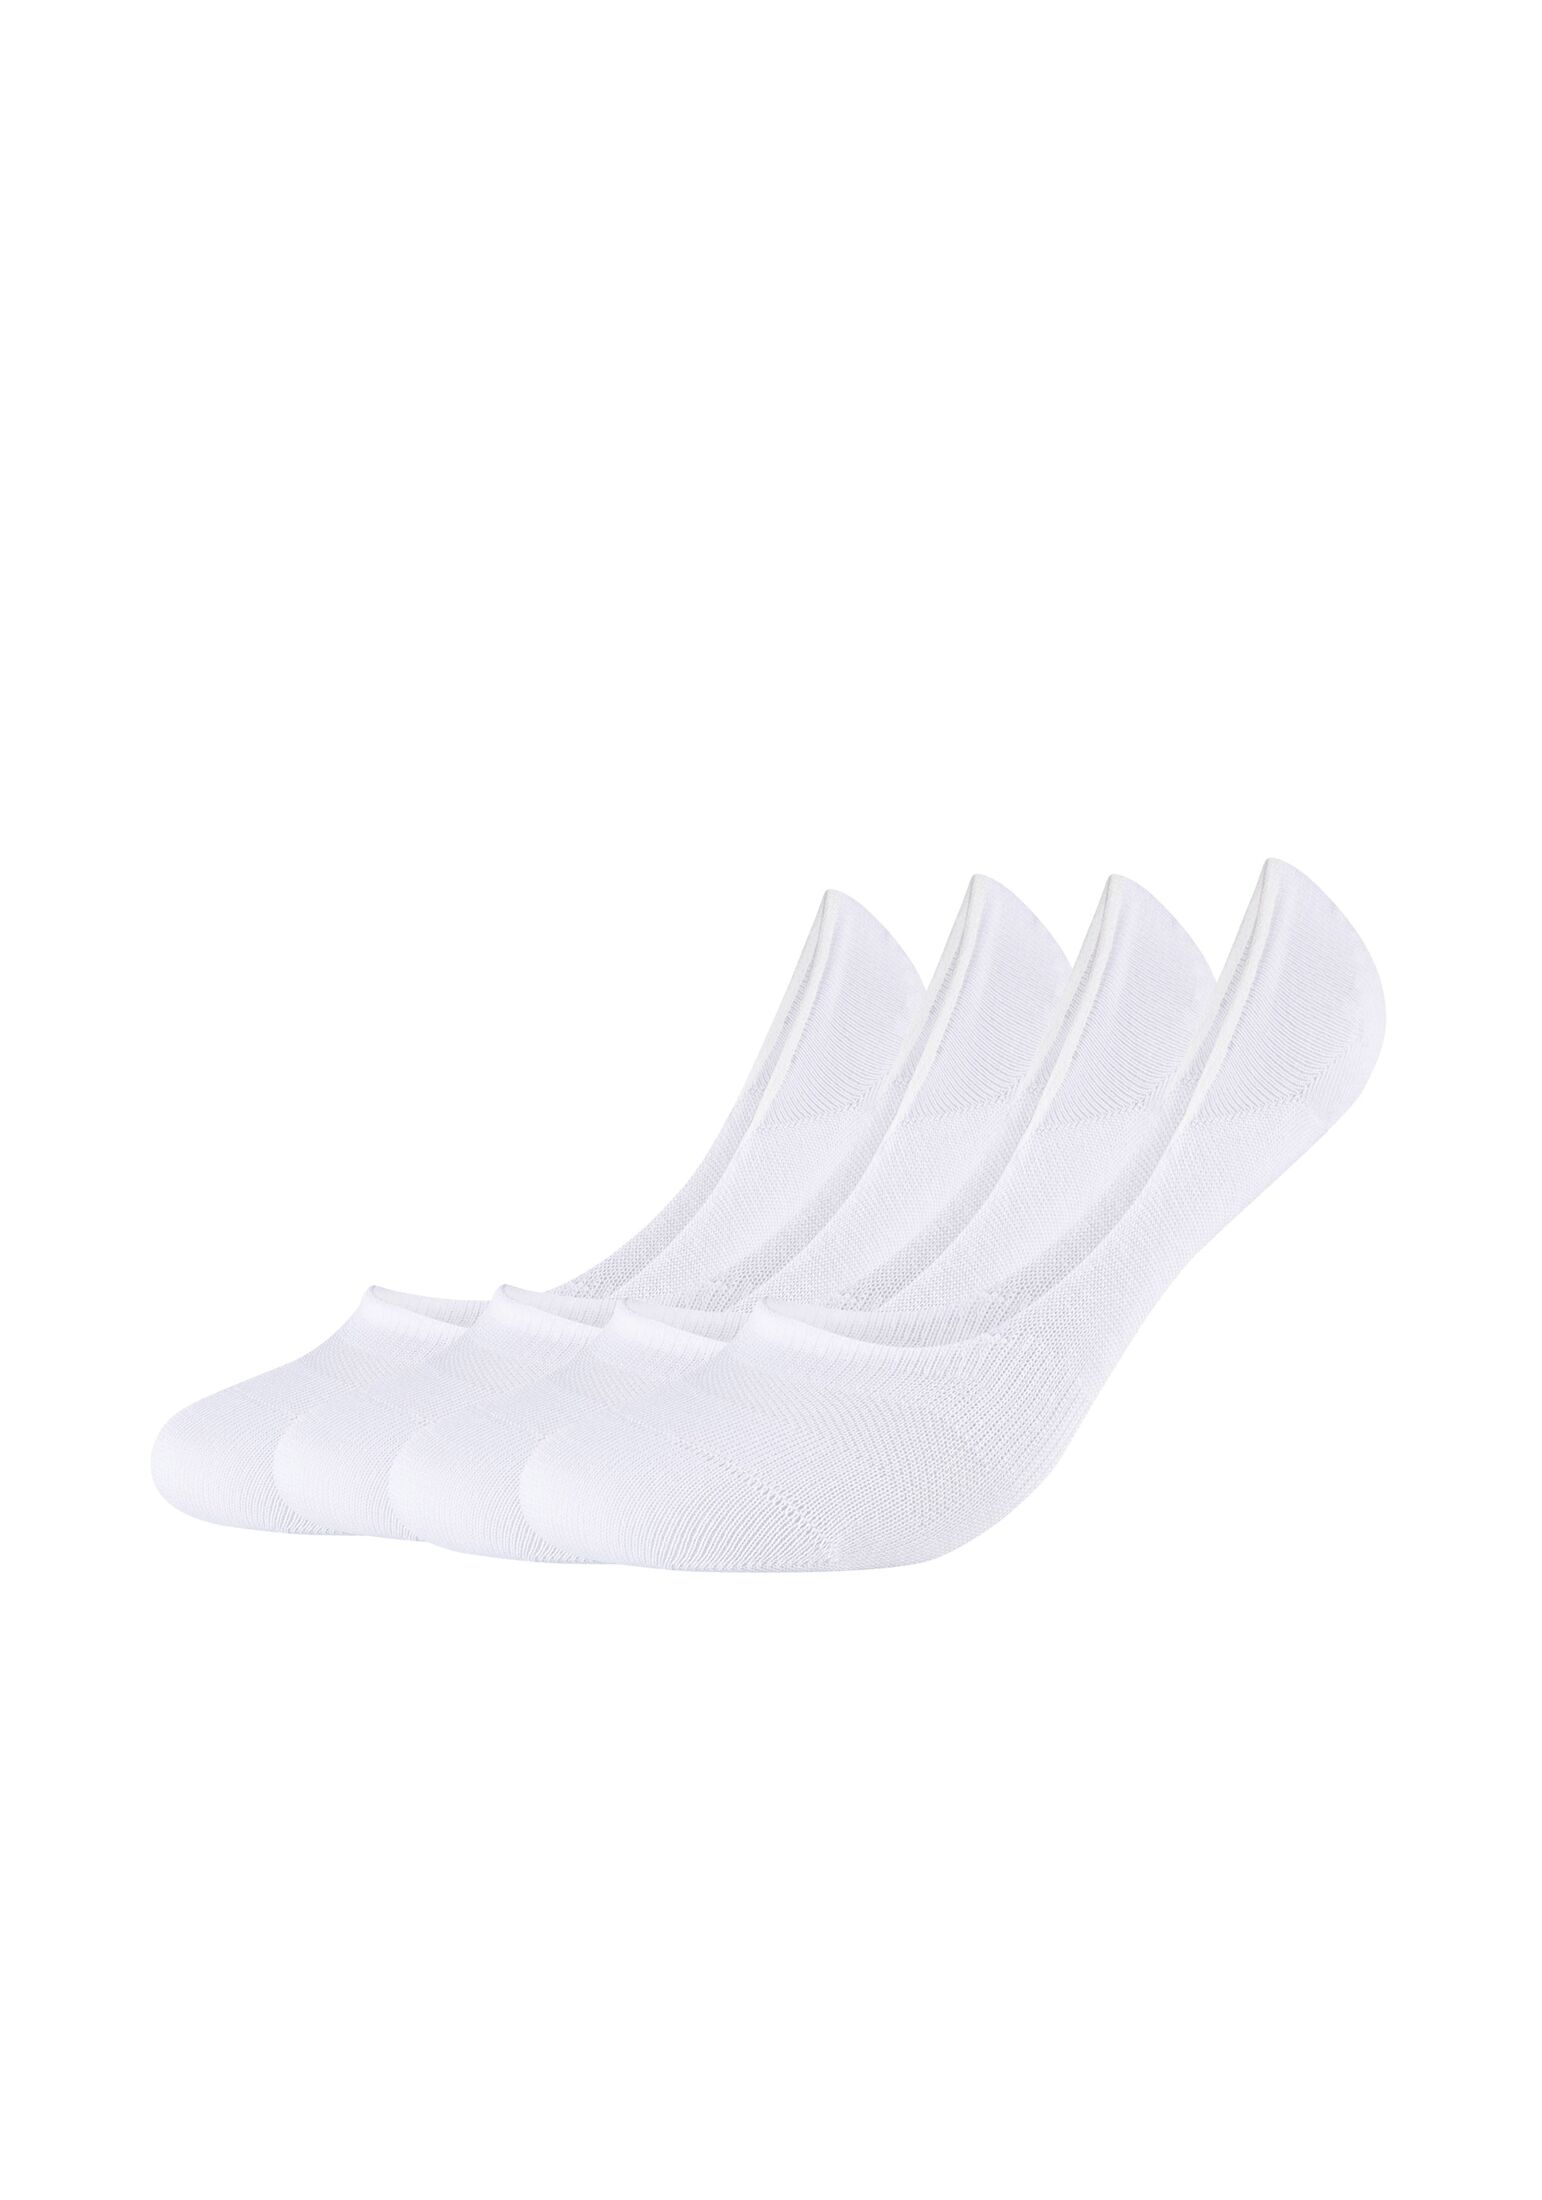 Носки camano Füßlinge 4 шт comfort, белый